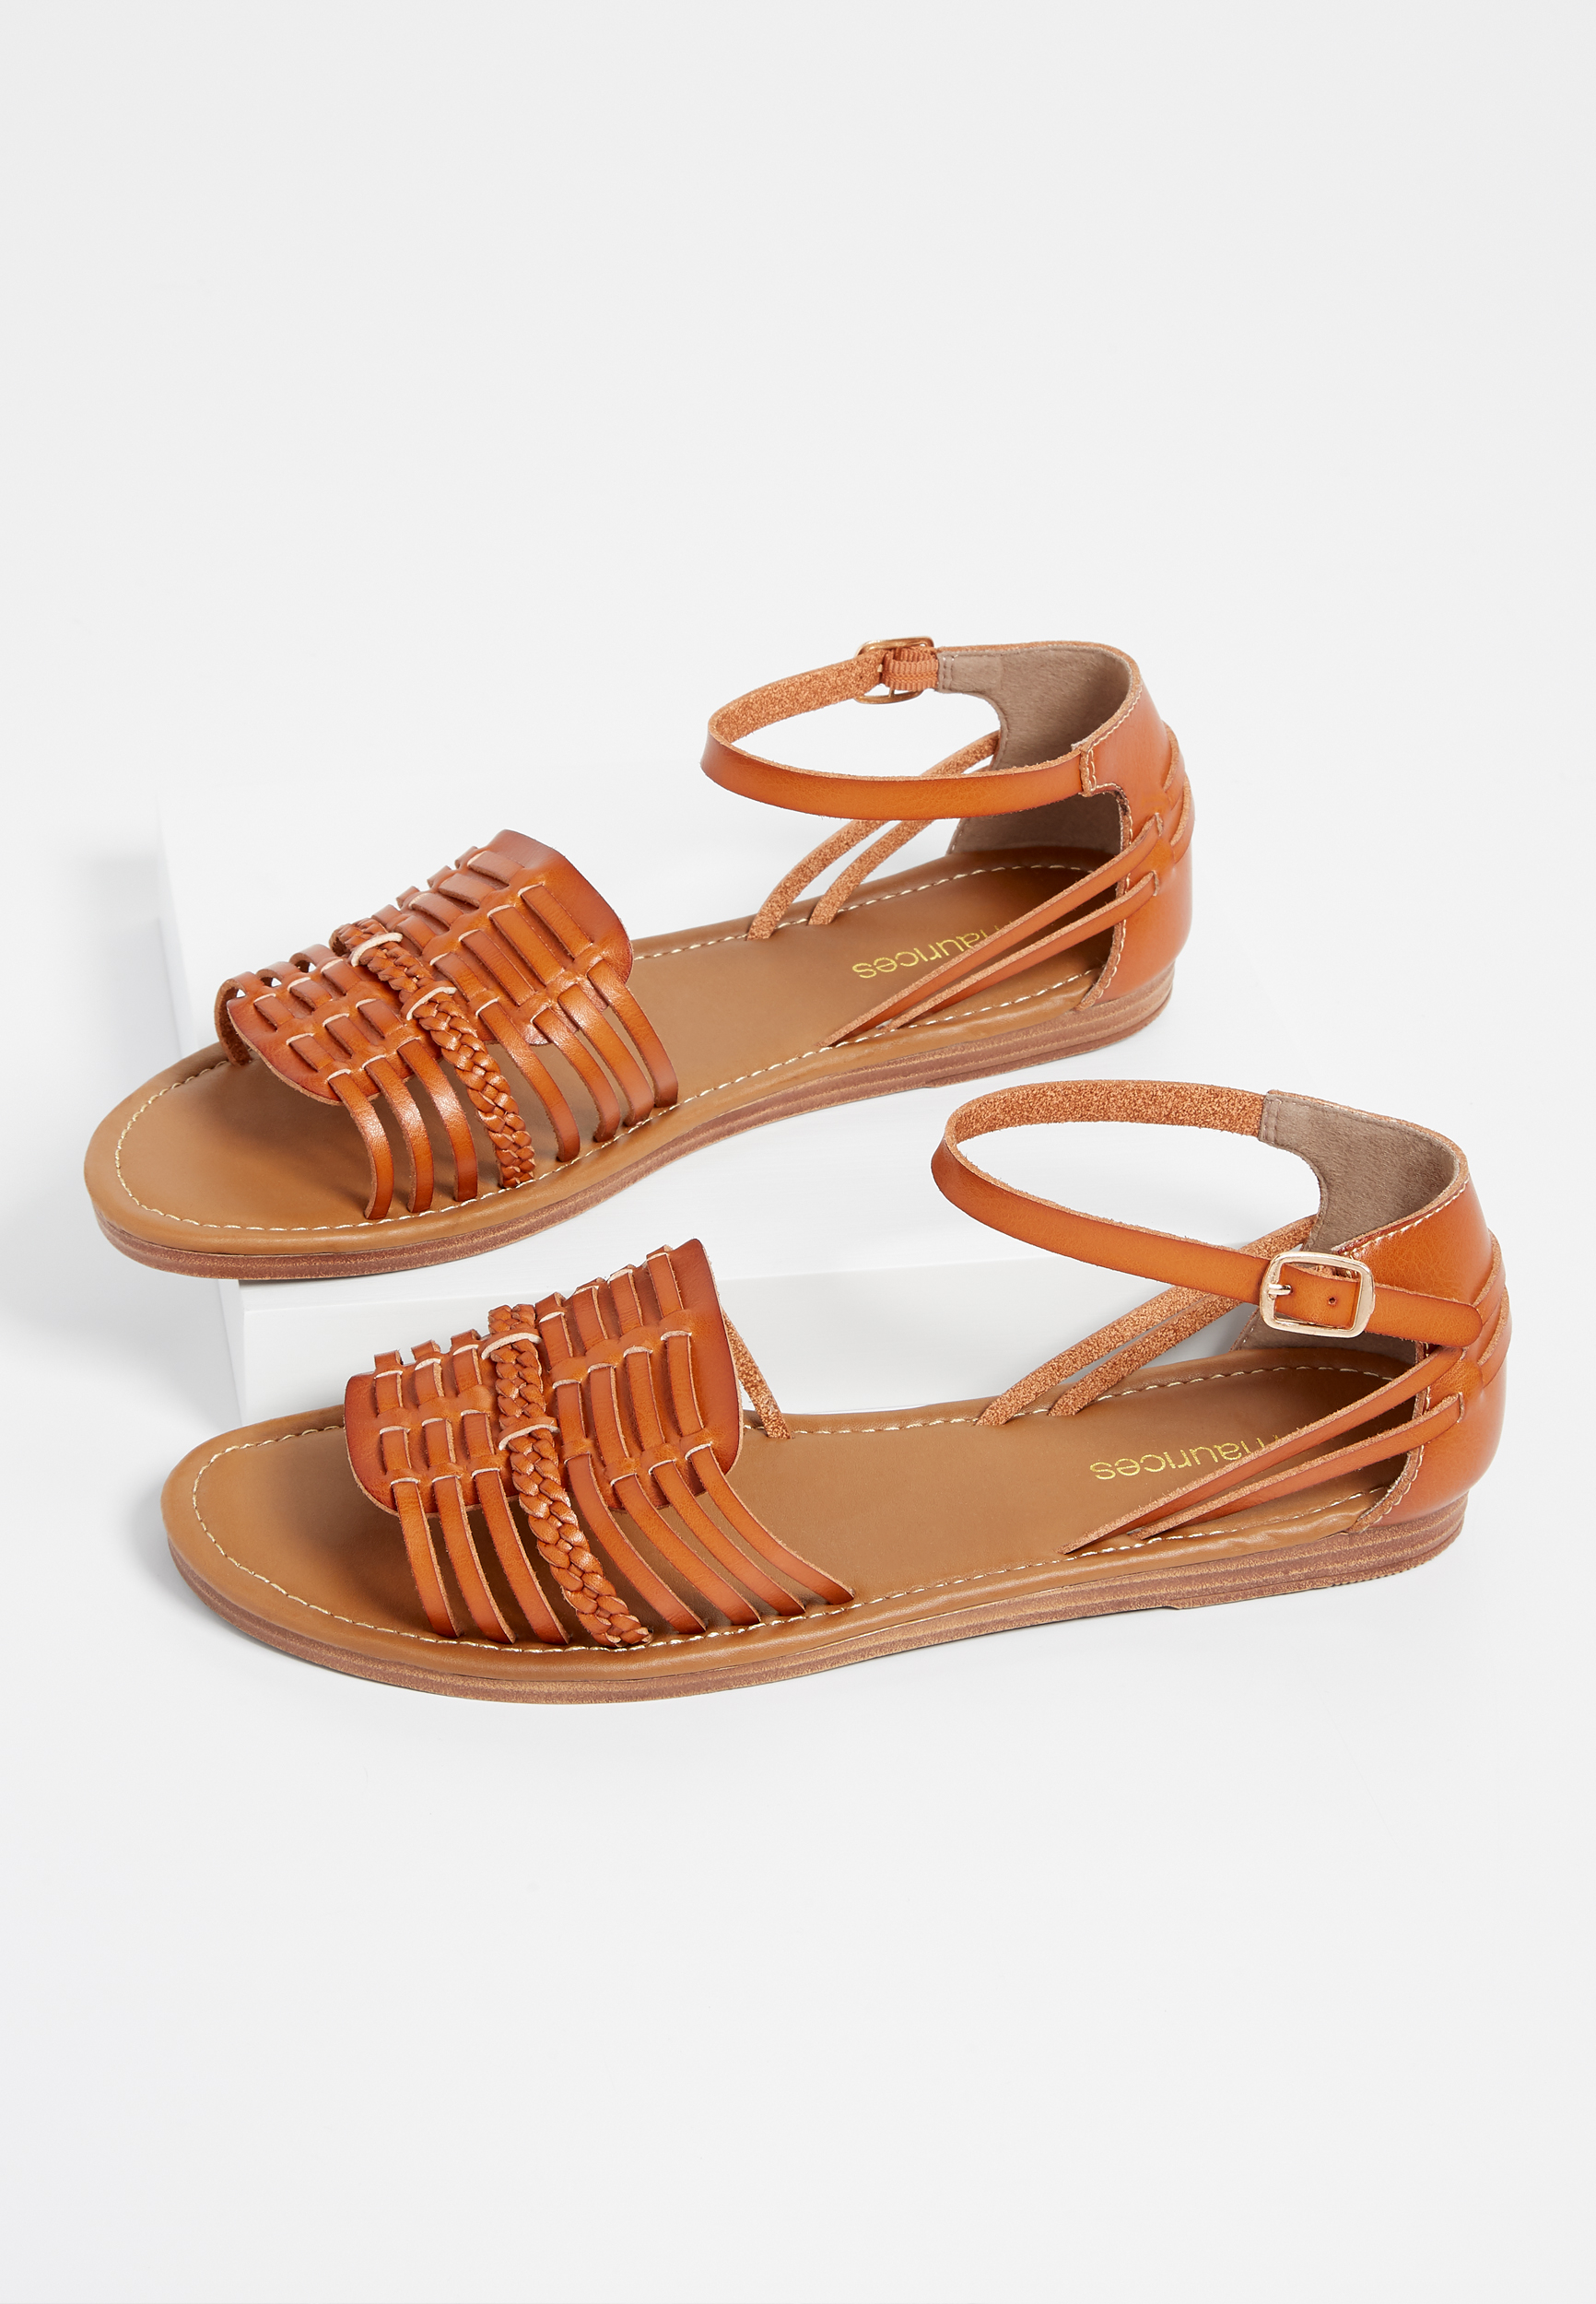 huarache sandals open toe